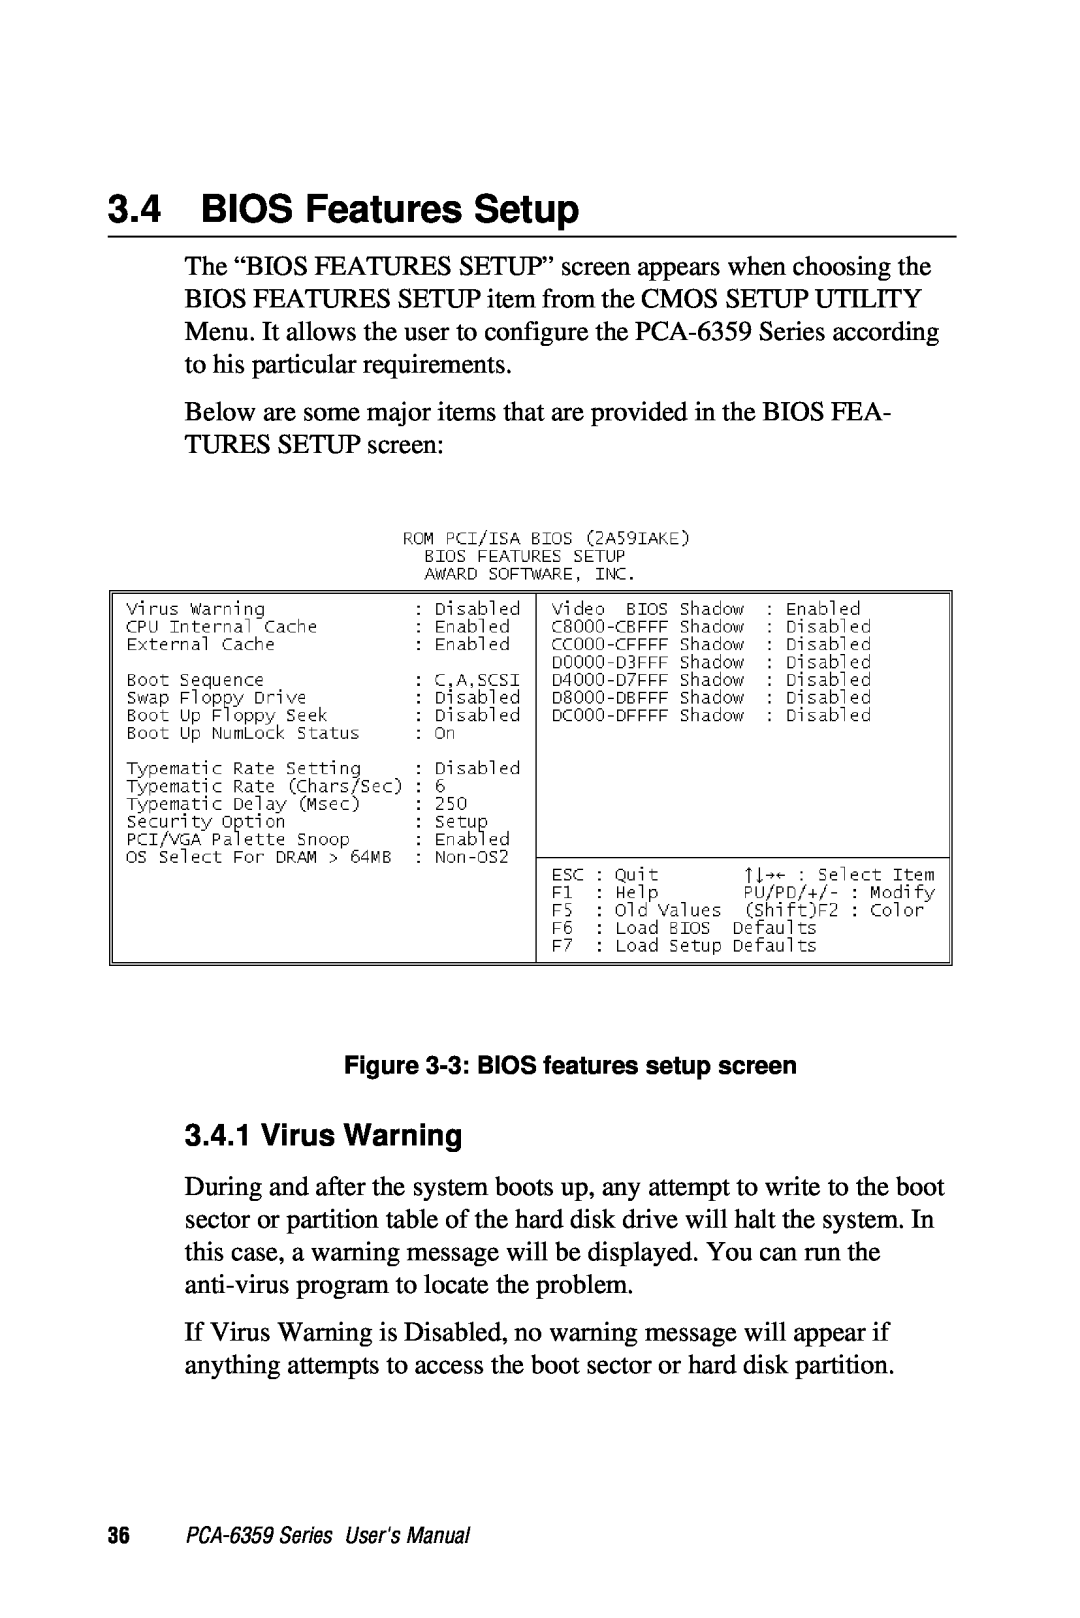 Advantech PCA-6359 user manual BIOS Features Setup, Virus Warning 